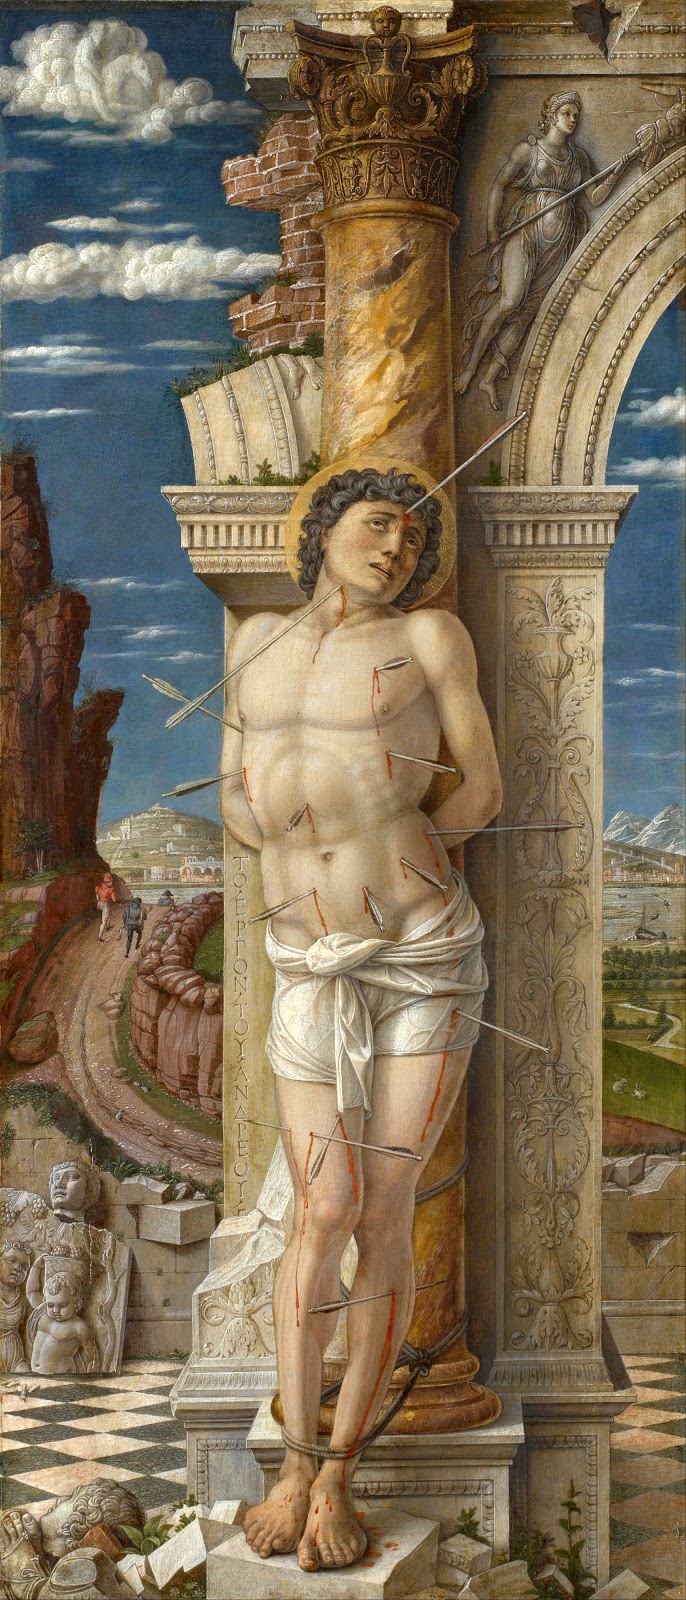 Andrea+Mantegna-1431-1506 (89).jpg